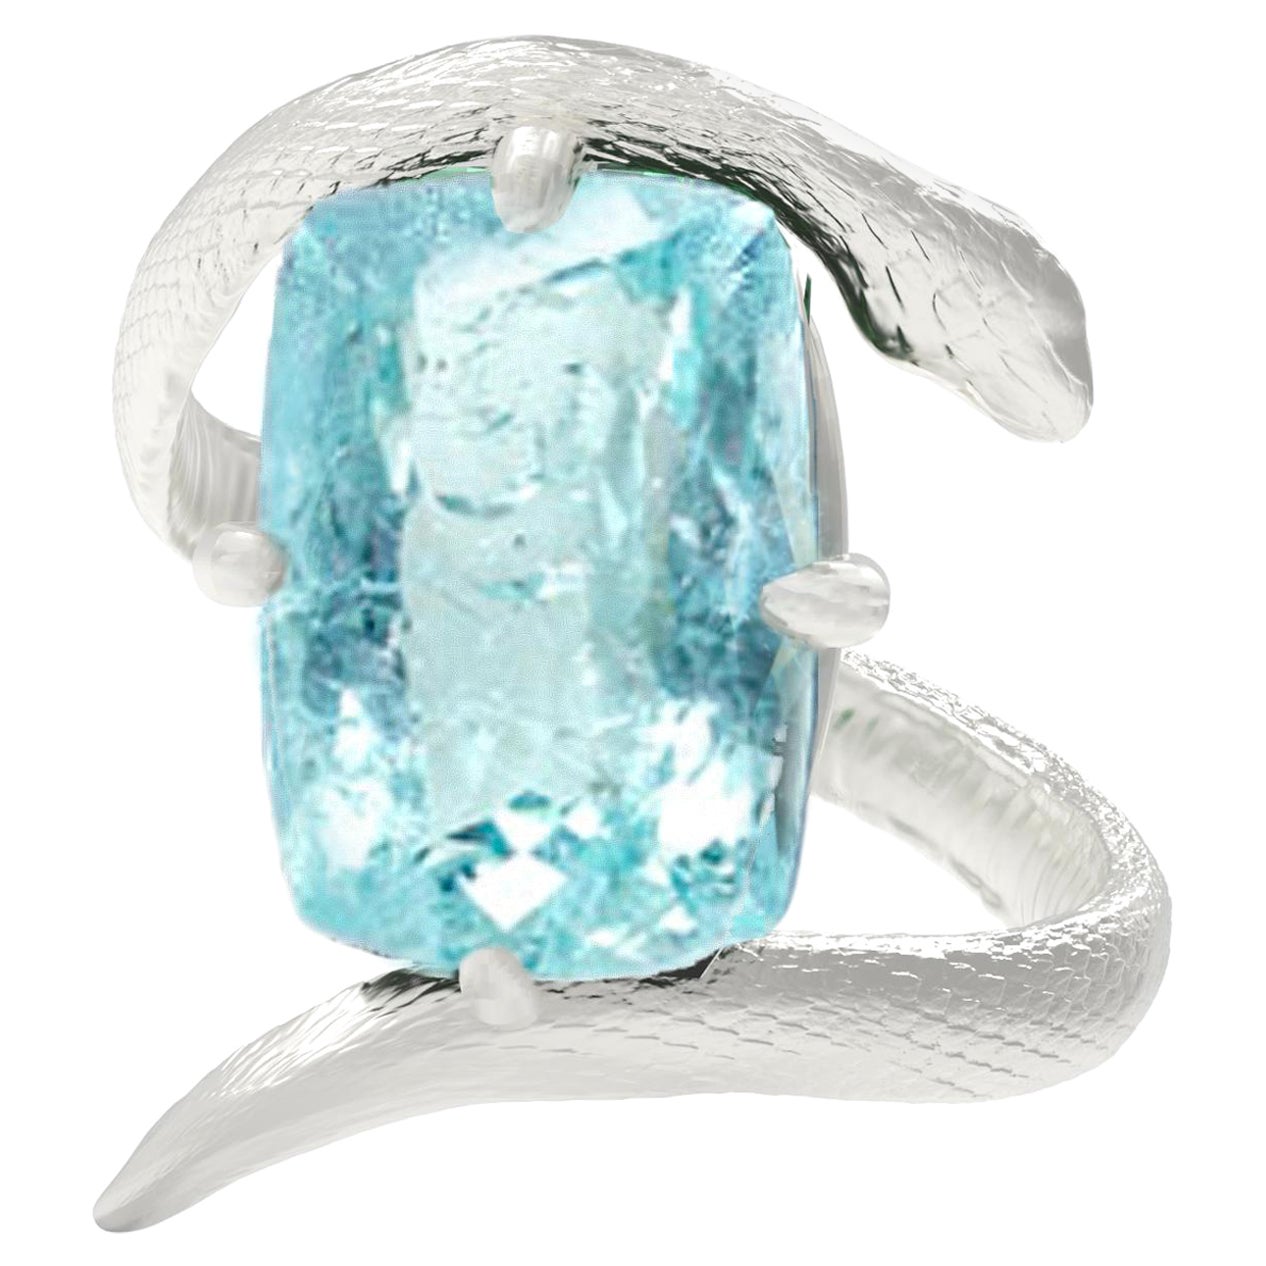 Eighteen Karat White Gold Contemporary Ring with Blue Paraiba Tourmaline